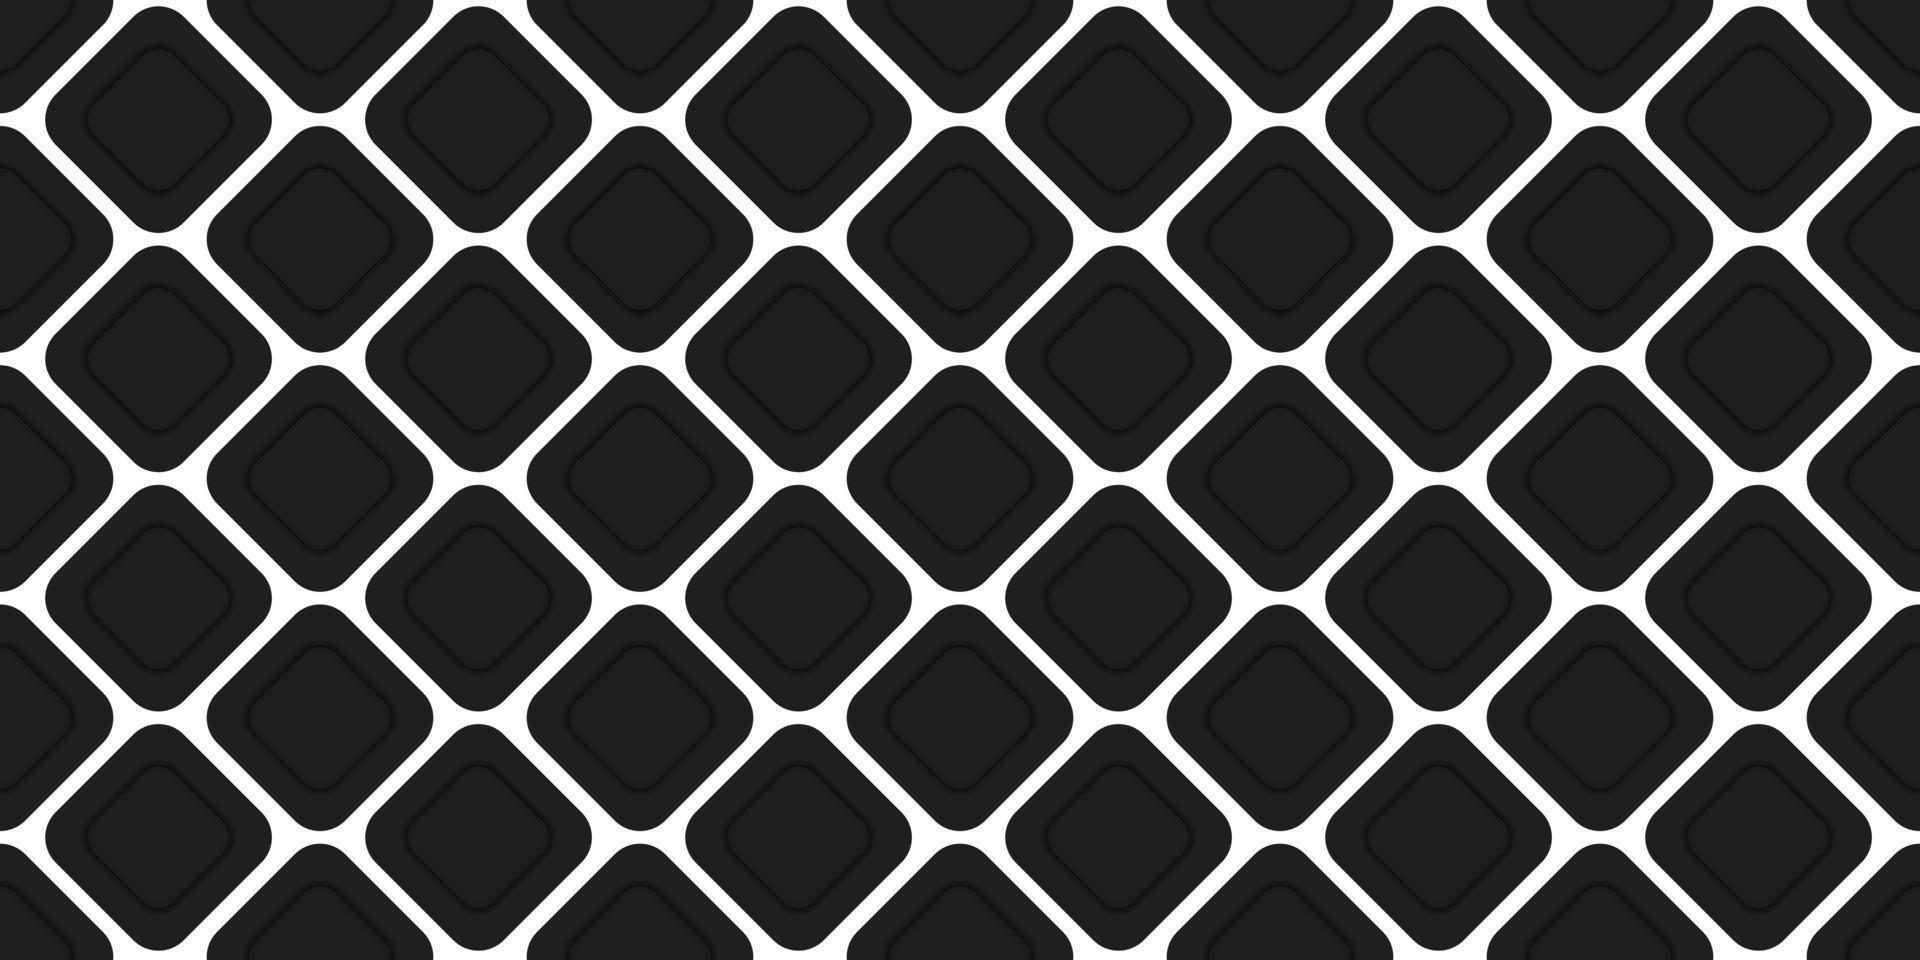 Seamless Black and White Rhombus Pattern. Modern Geometric Texture Decoration. Fashion Style Geometric Diagonal Line Fabric. Elegant Rhombus Background. Abstract Wallpaper Design. Vector Illustration.